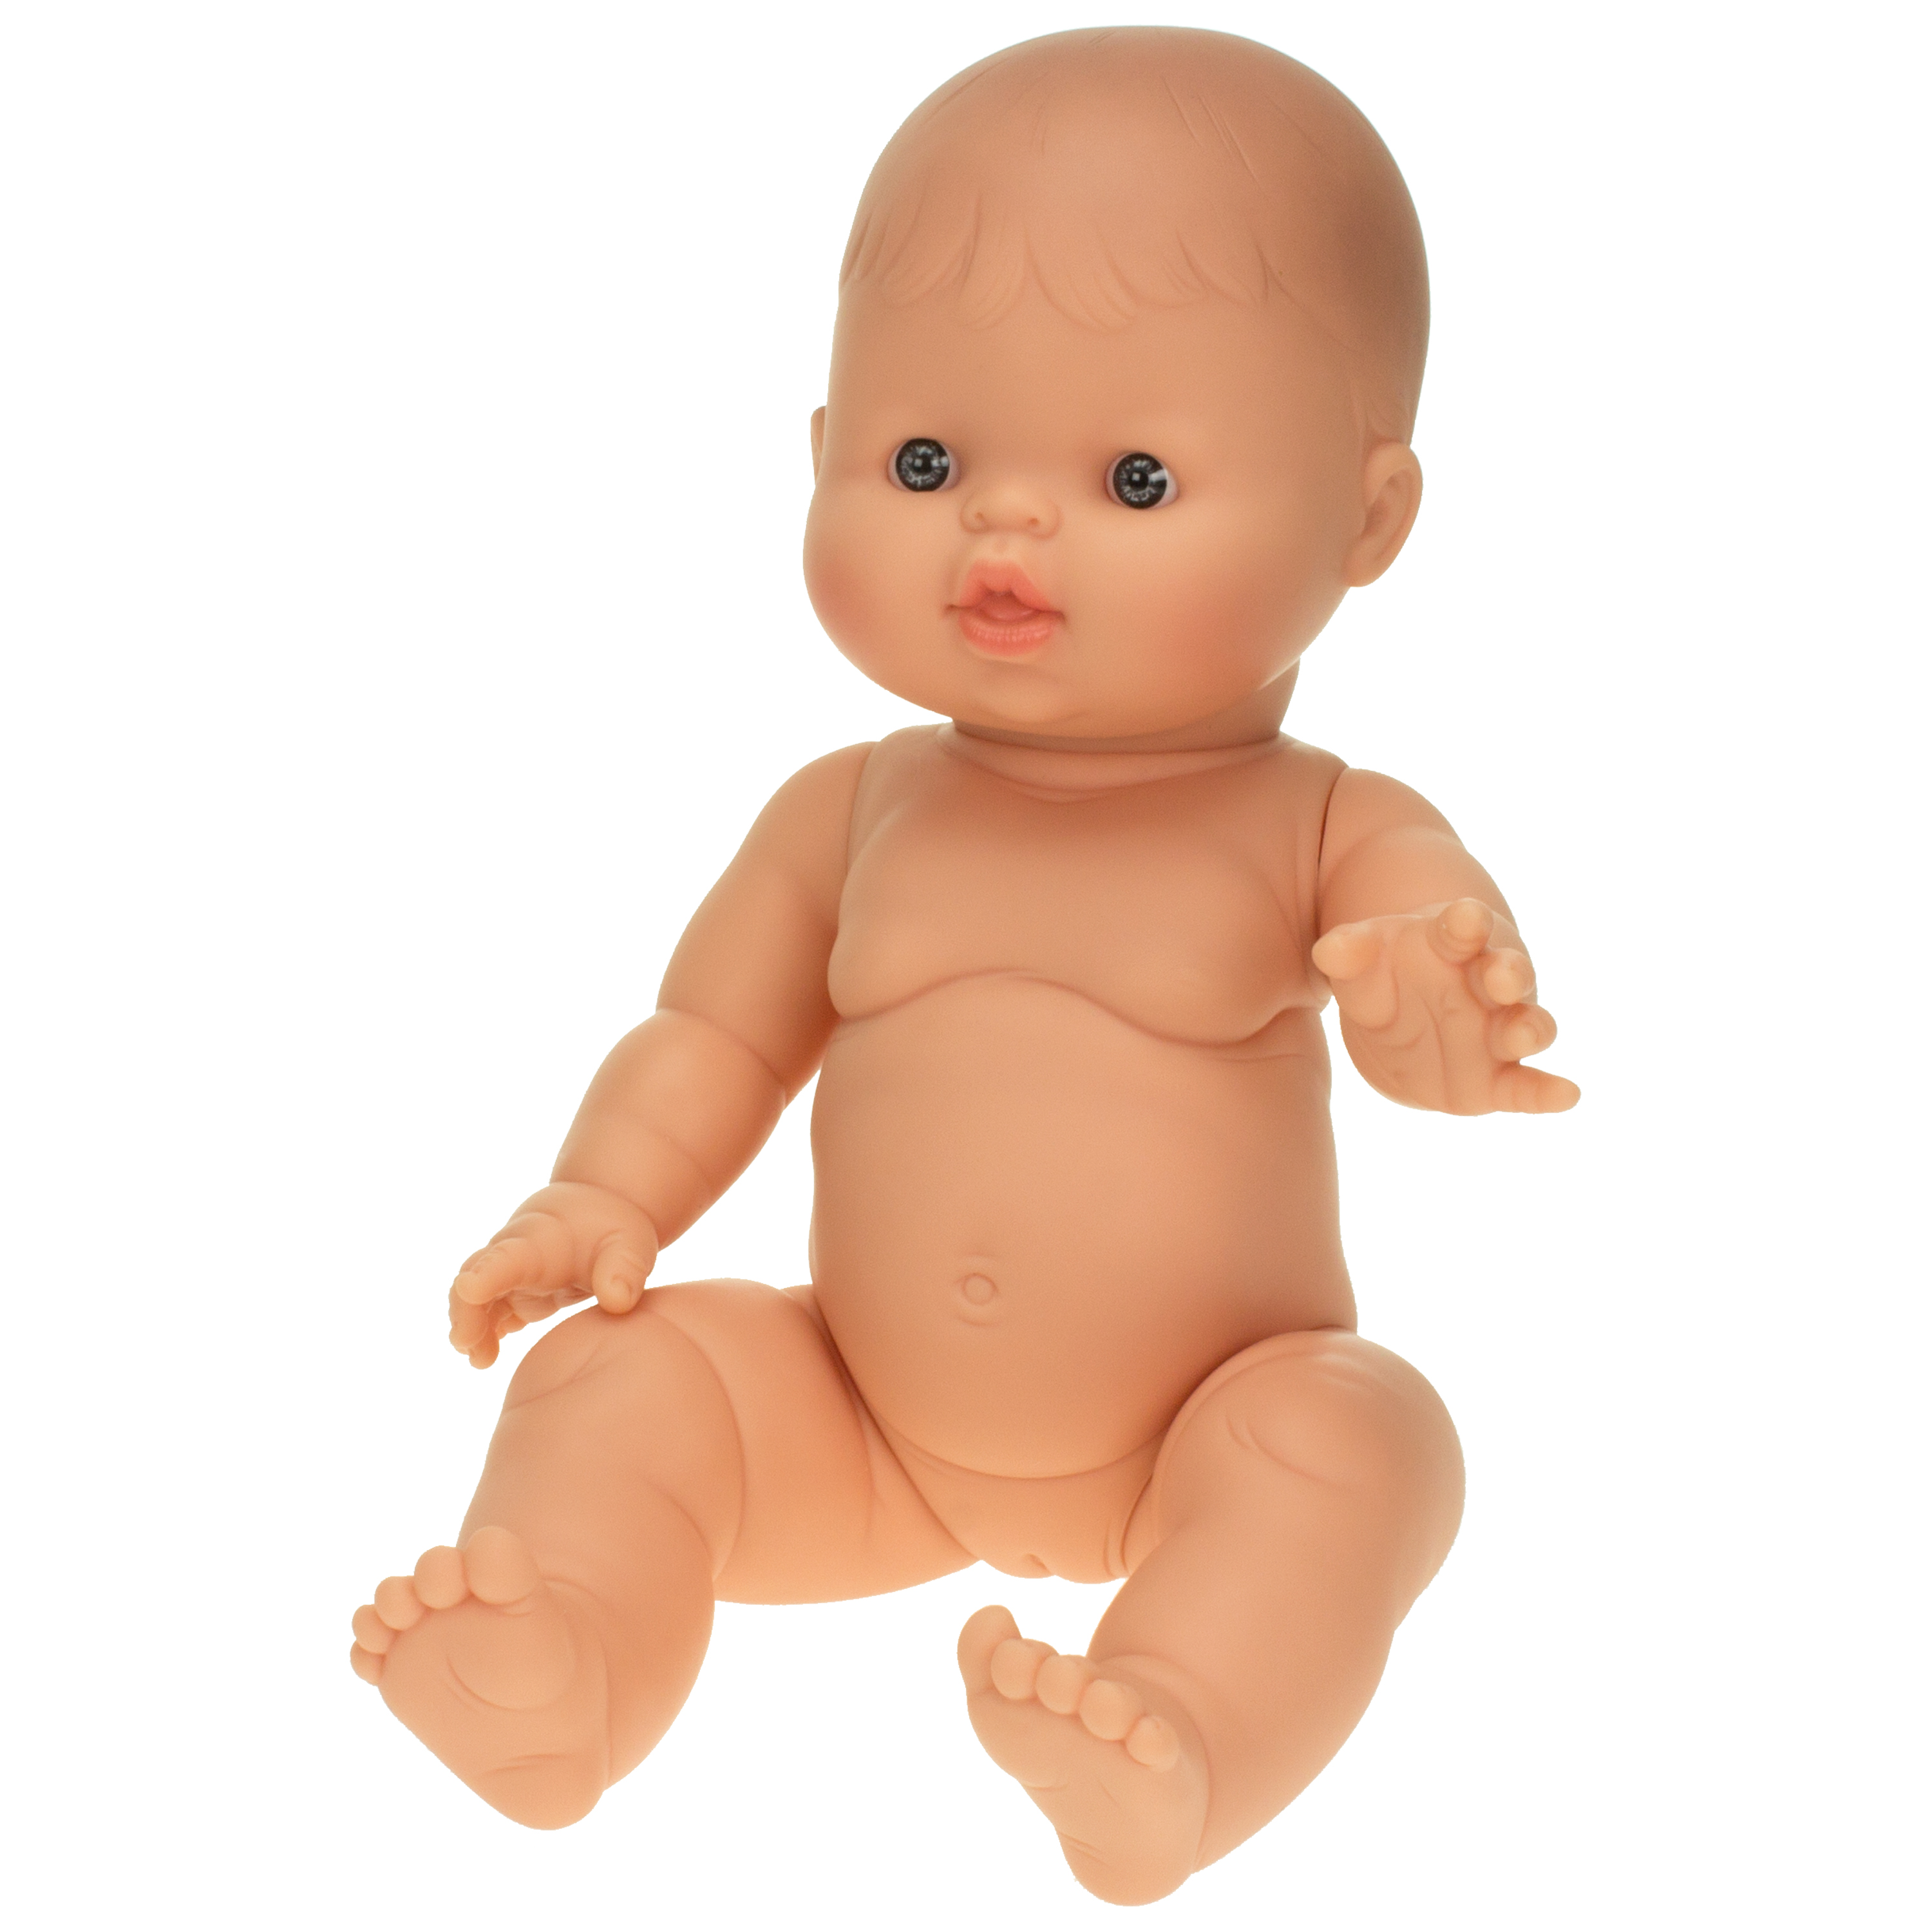 Babypuppe Mädchen 'europäisch', 30 cm